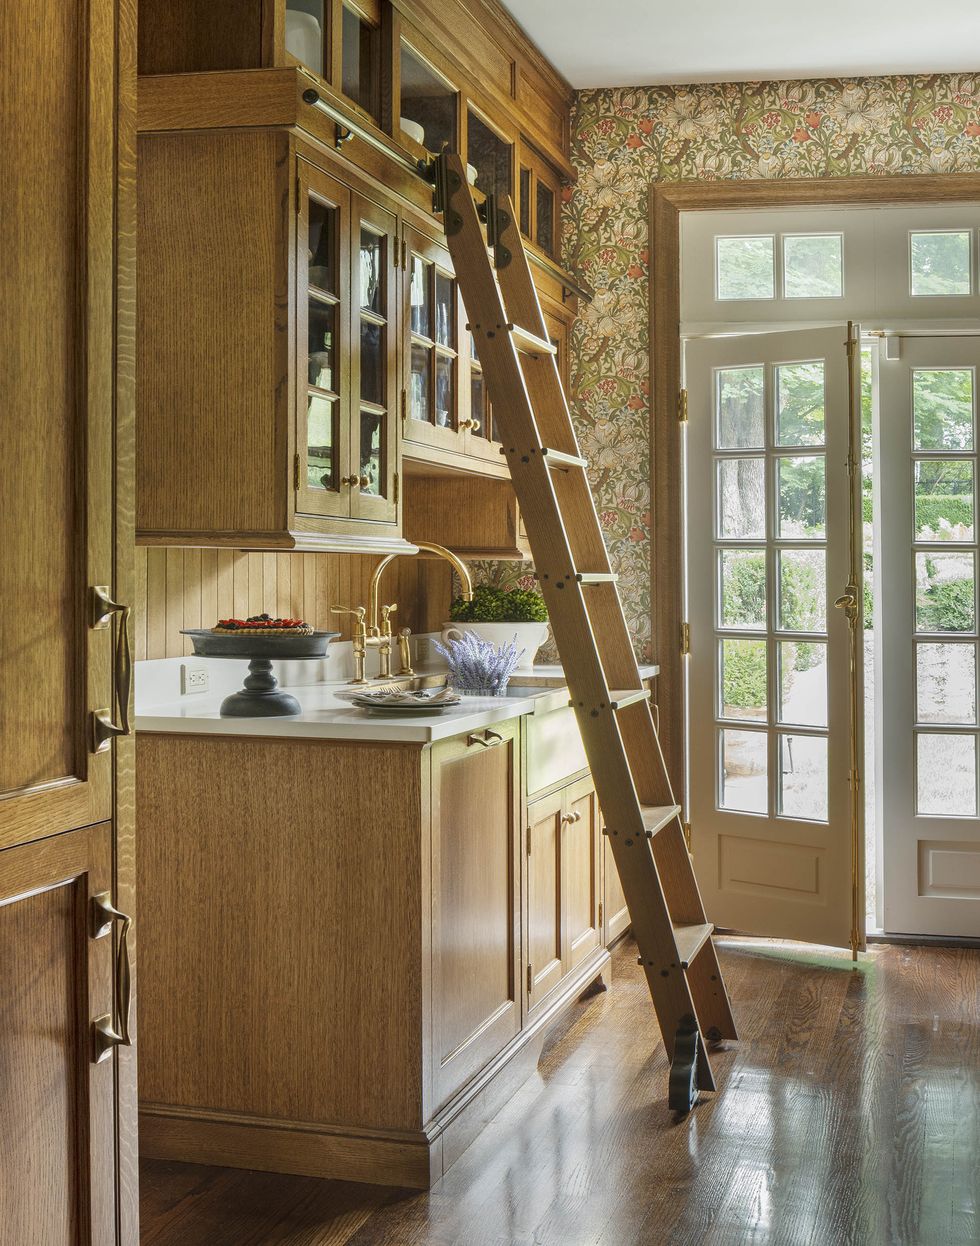 ladder, oak cabinets, sink, french doors